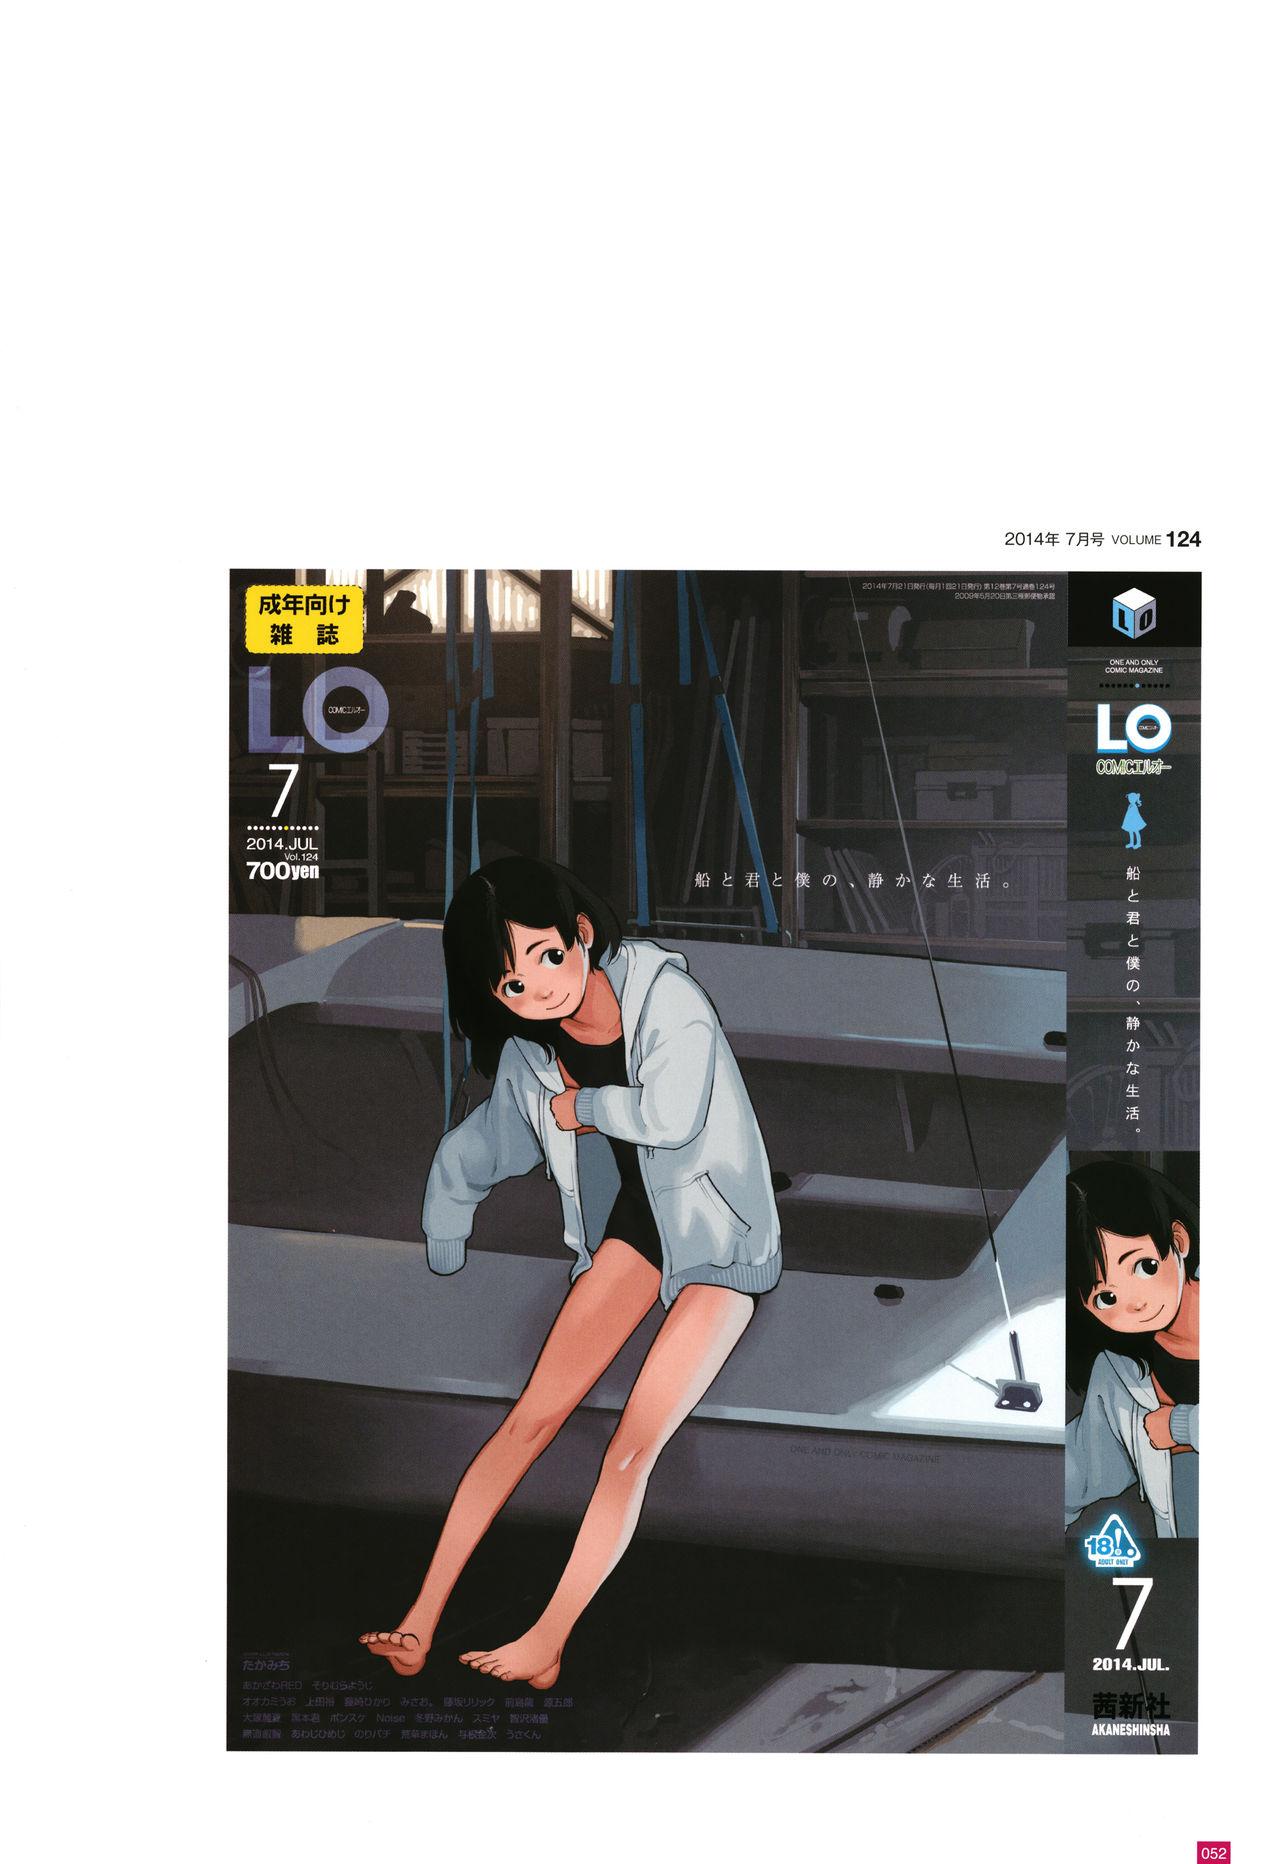 [Takamichi] LO Artbook 2-B TAKAMICHI LO-fi WORKS 54